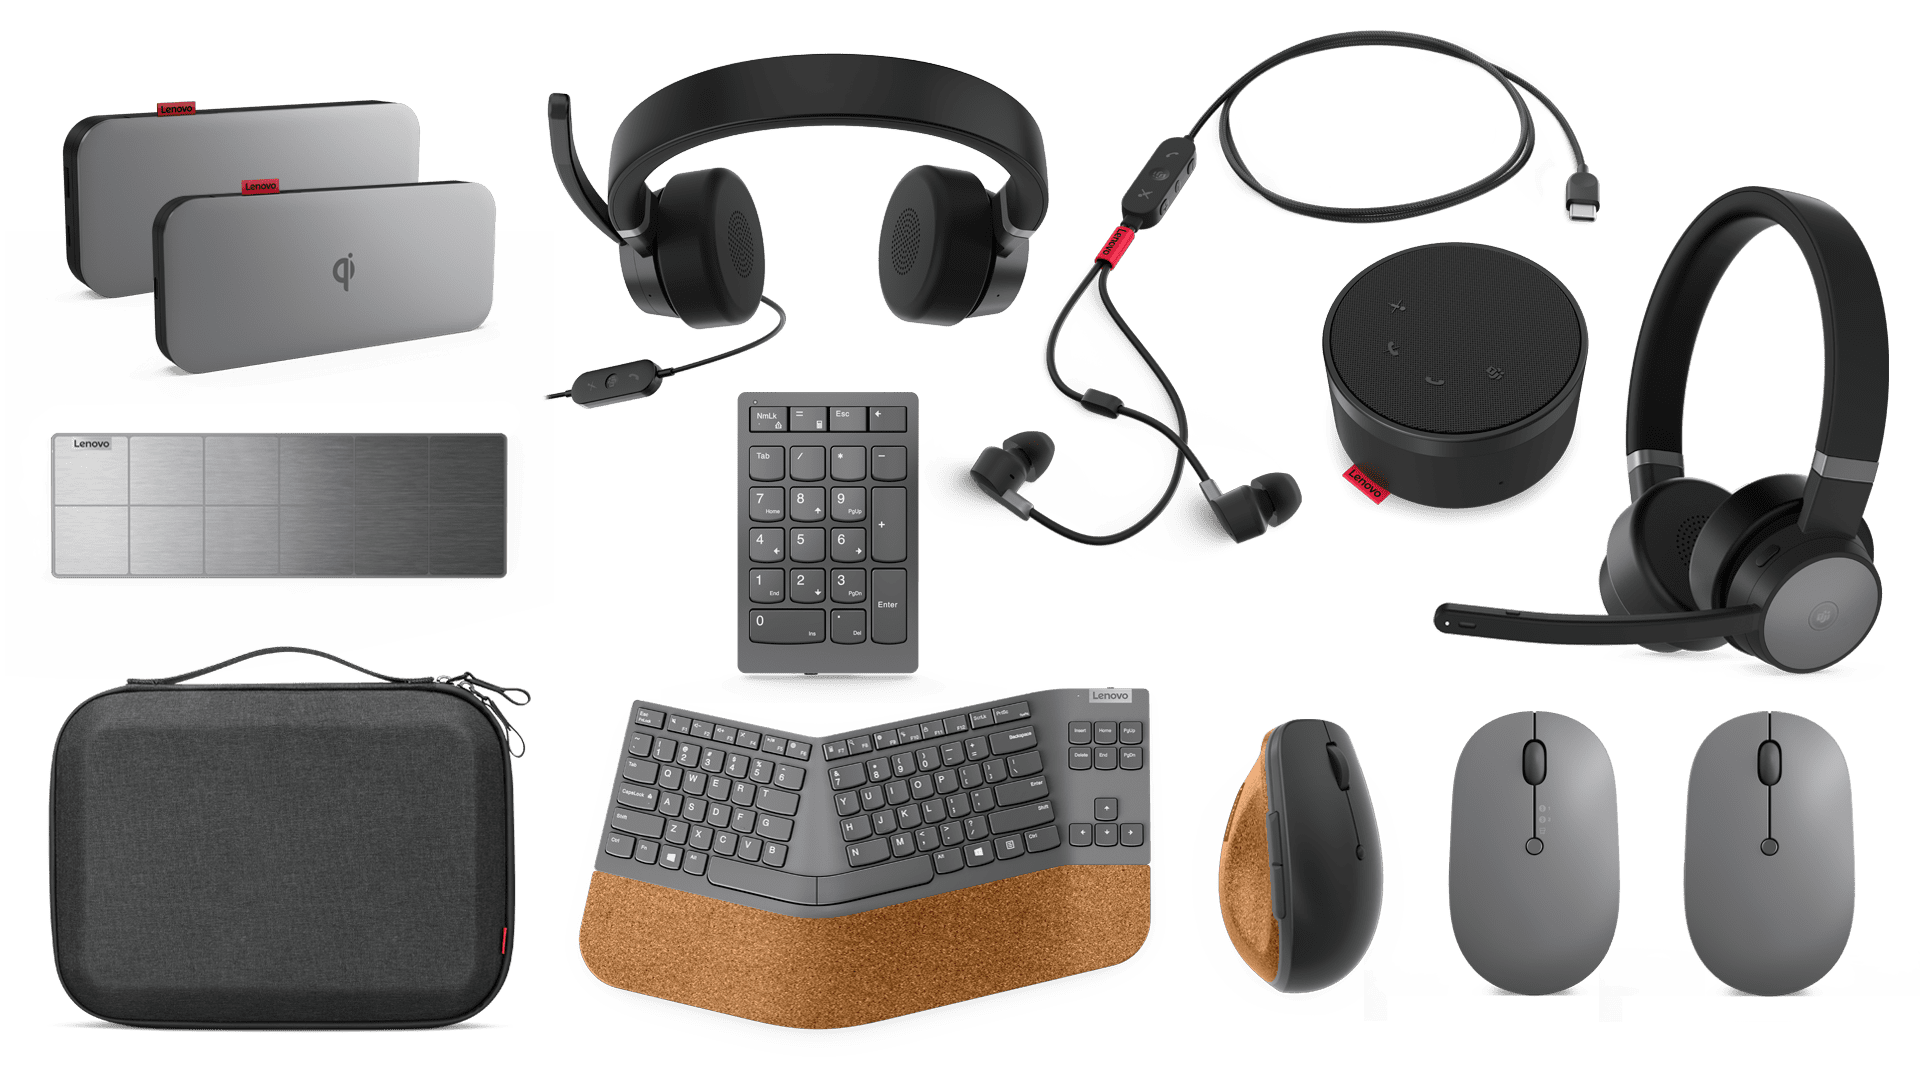 Full set of Lenovo Go accessories